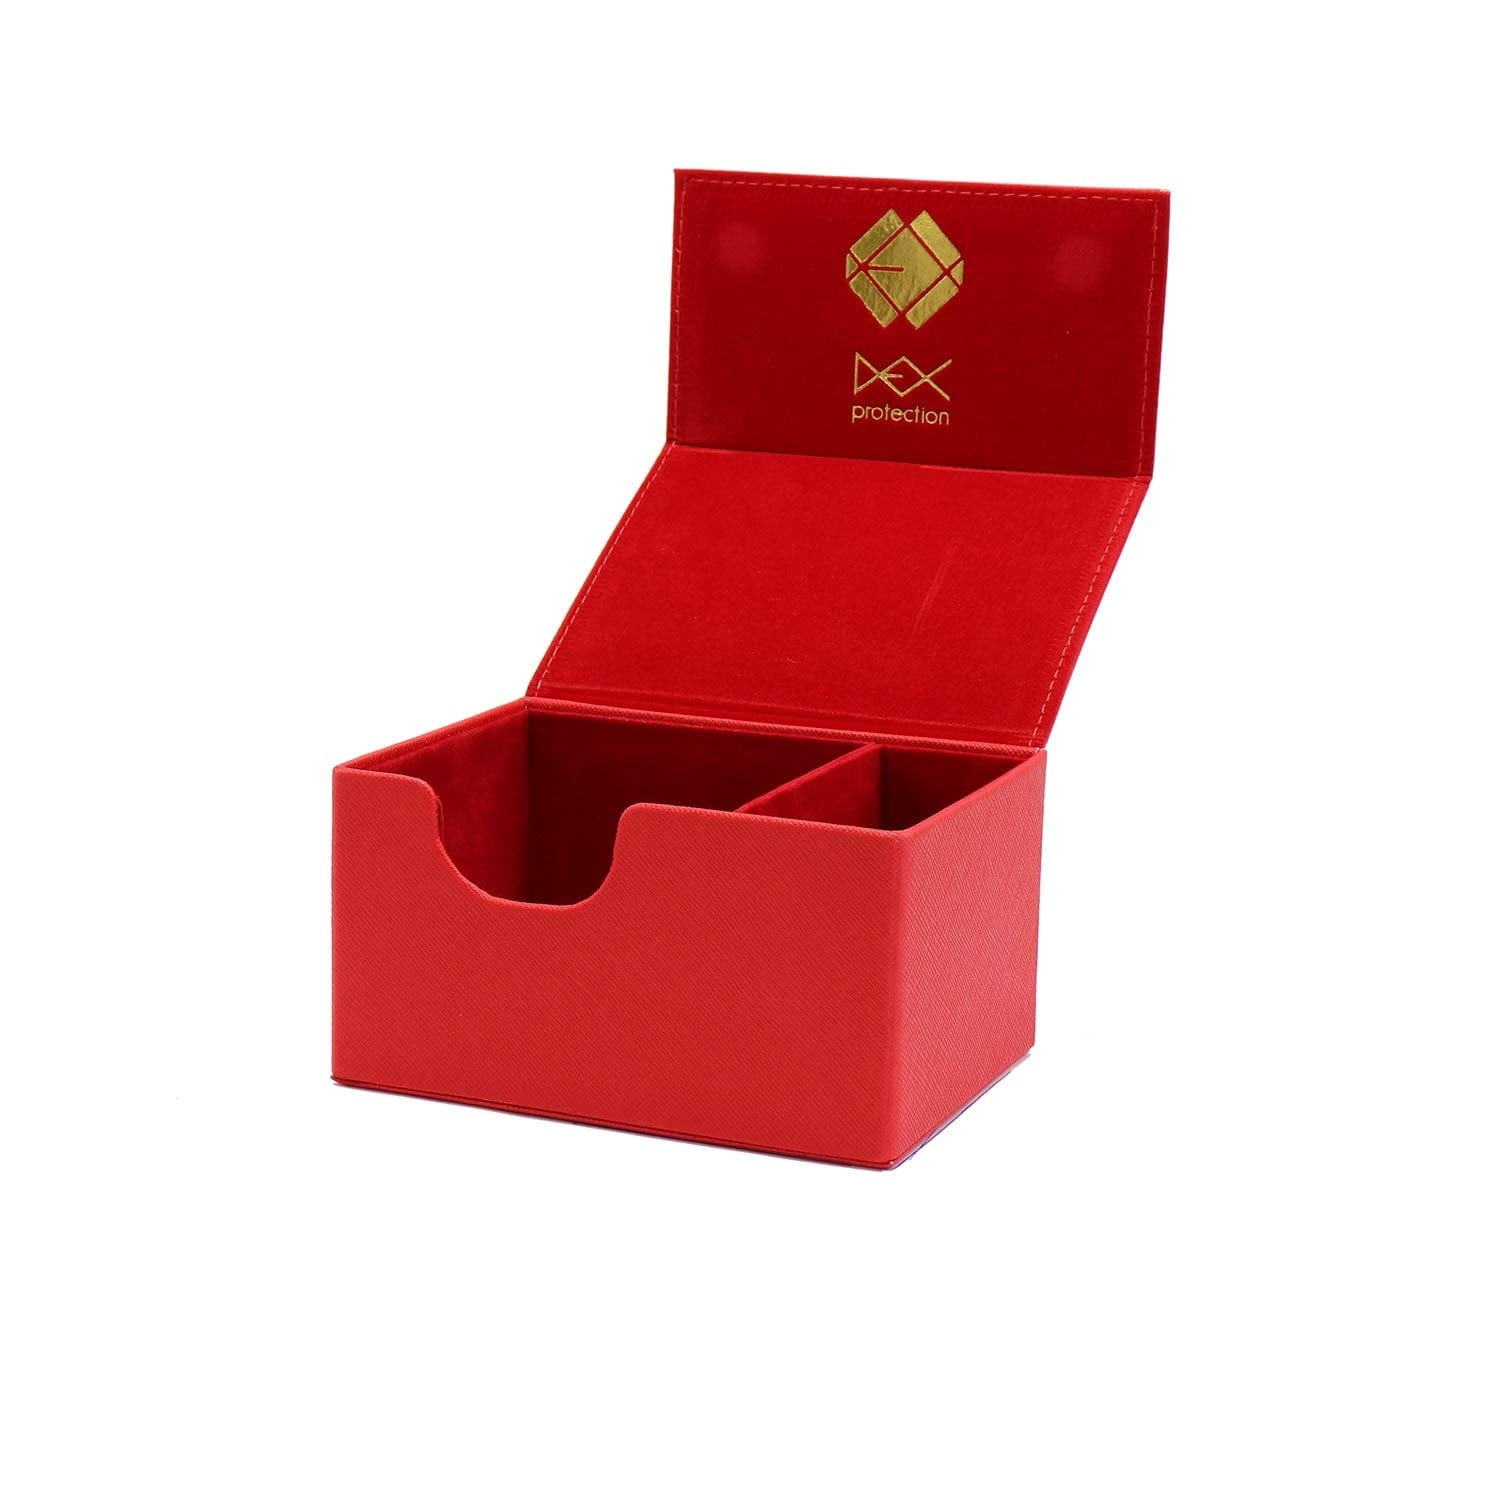 Dex Protection Accessories Dex Protection Creation Line Deck Box: Medium - Red